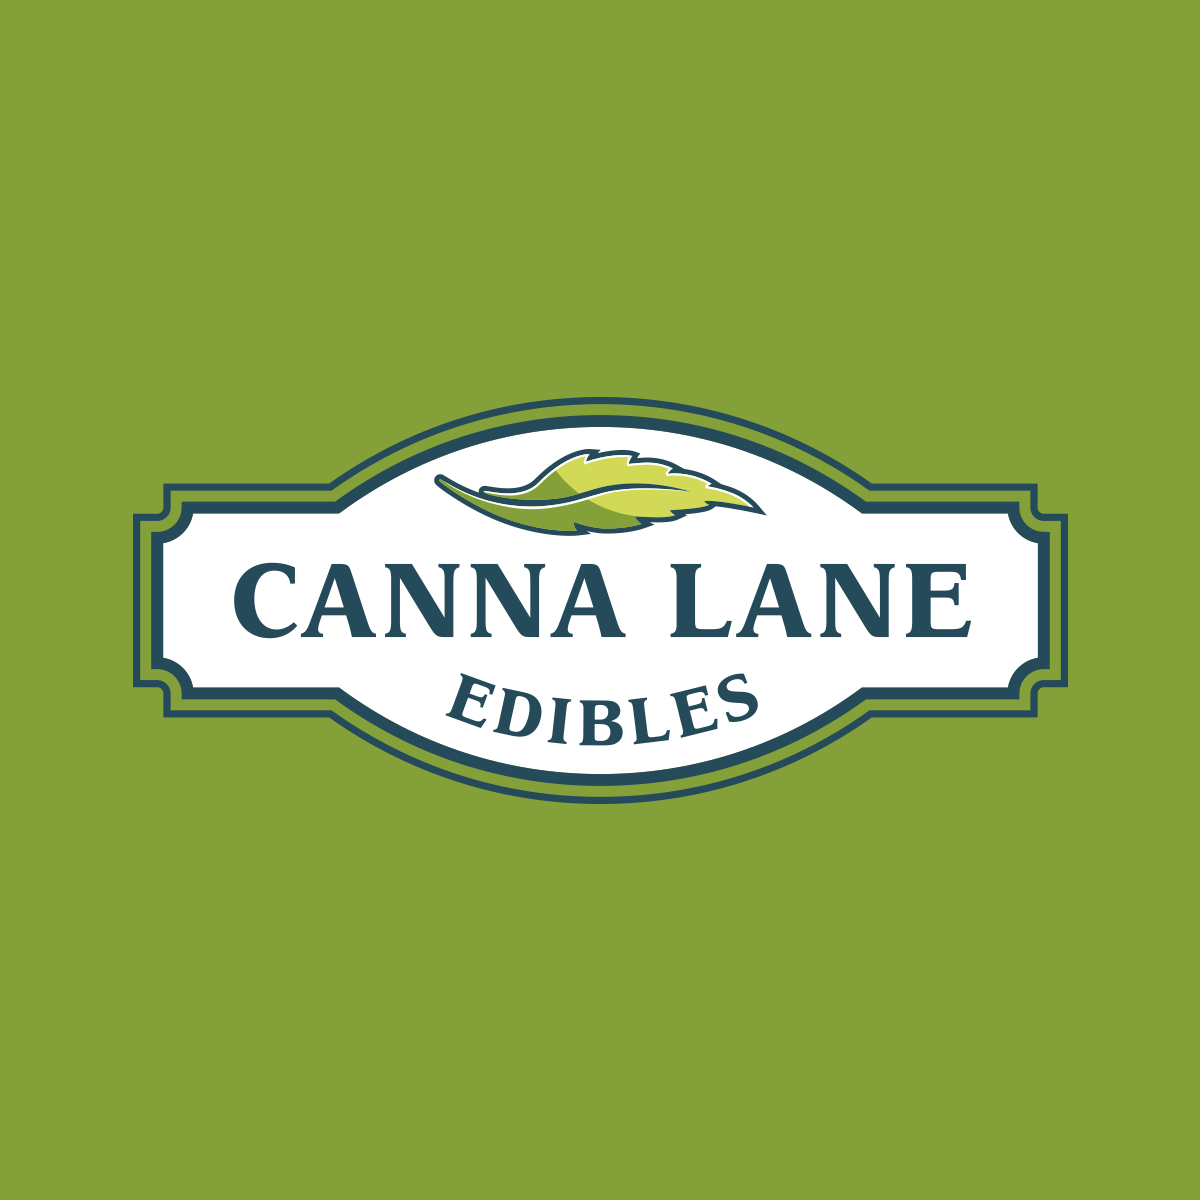 Canna Lane Edibles in Castlegar BC logo design and brand identity